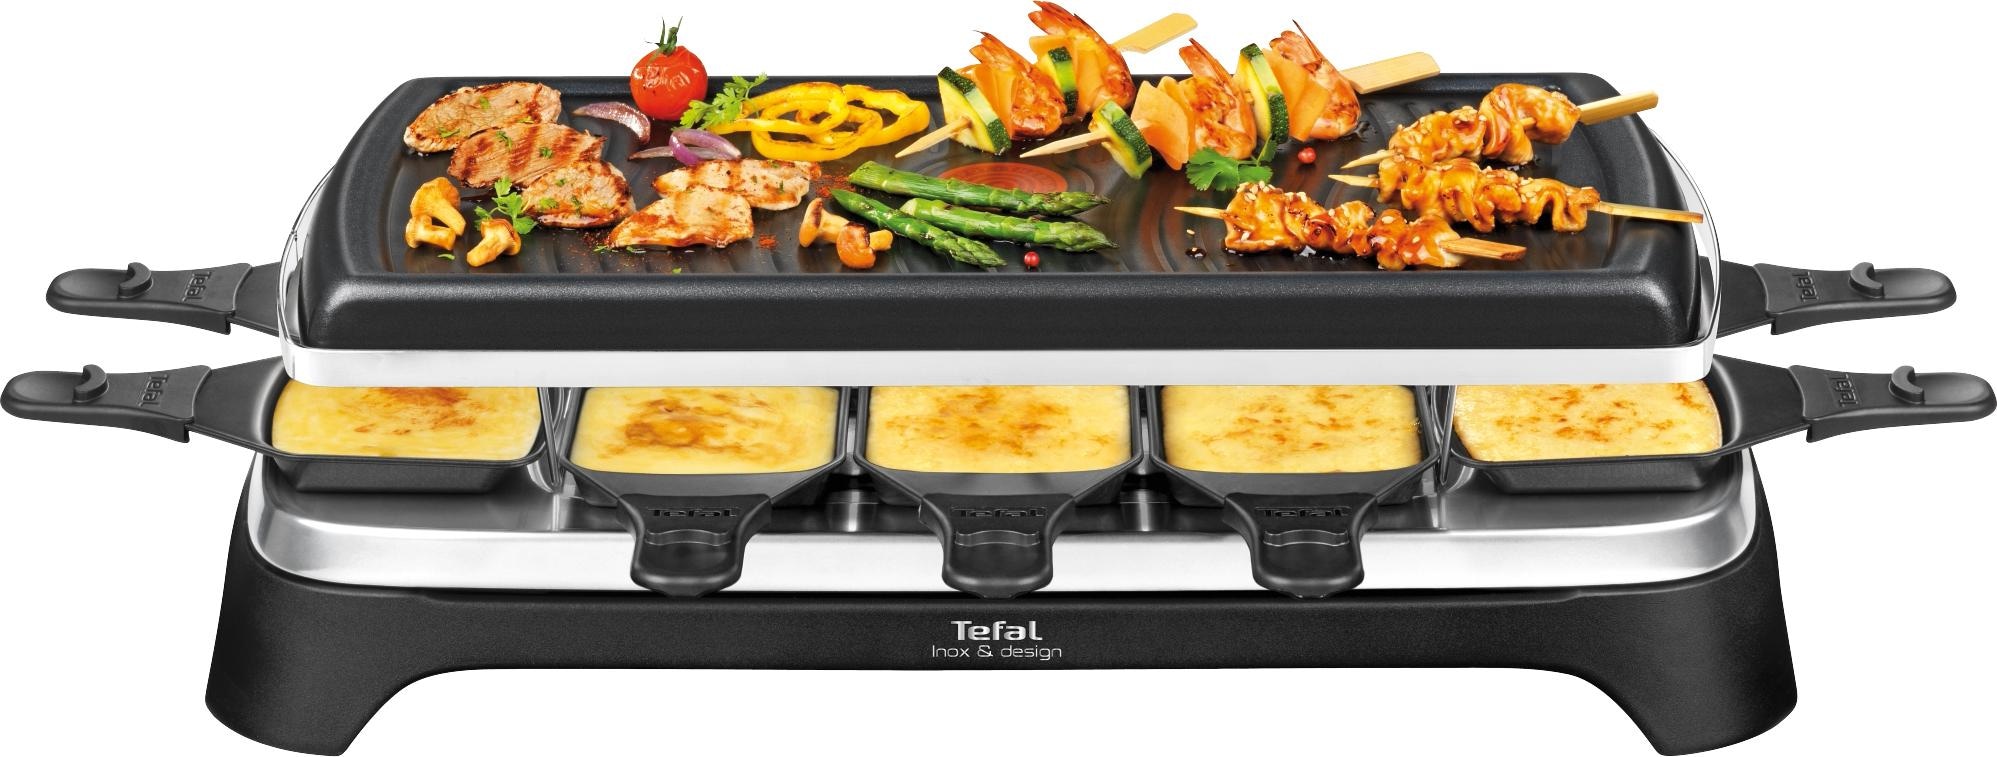 Tefal Raclette RE4588, 10 Raclettepfännchen, 1350 Watt auf Raten kaufen